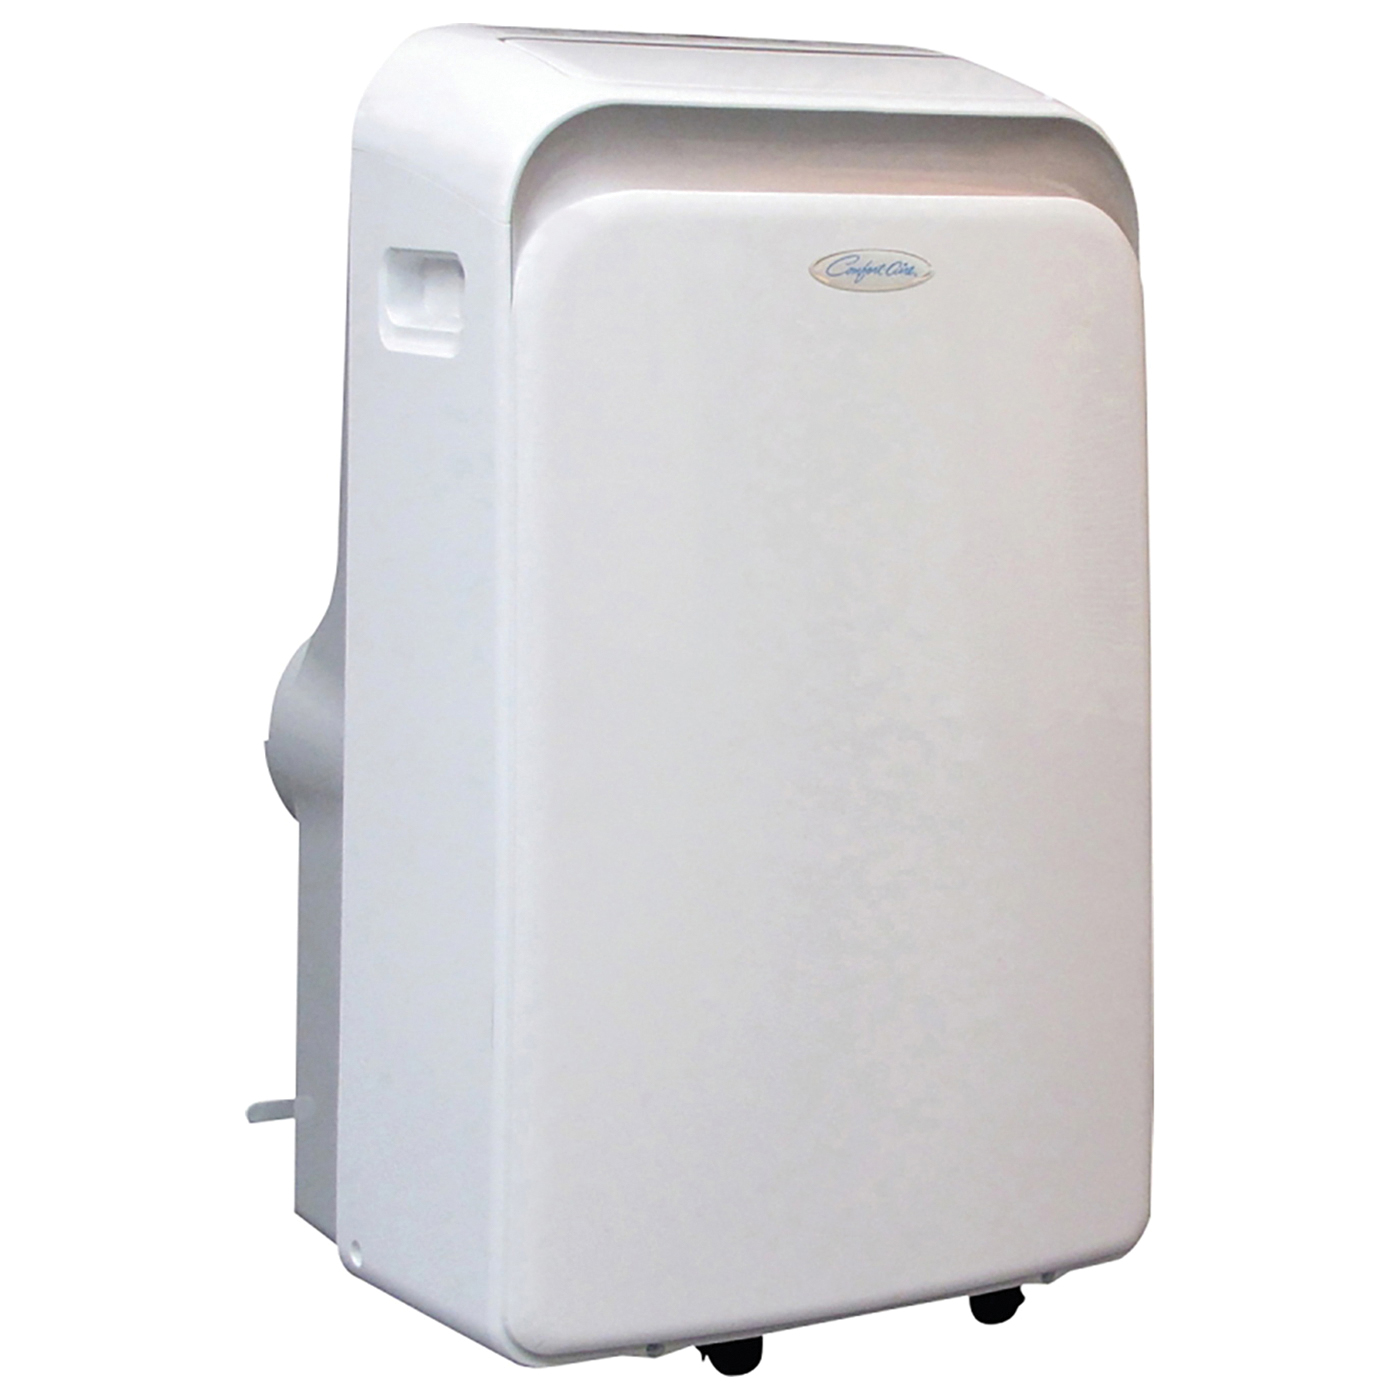 PSH-141D Portable Air Conditioner, 115 V, 60 Hz, 13500 Btu/hr Cooling, 11000 Btu/hr Heating, 3-Speed